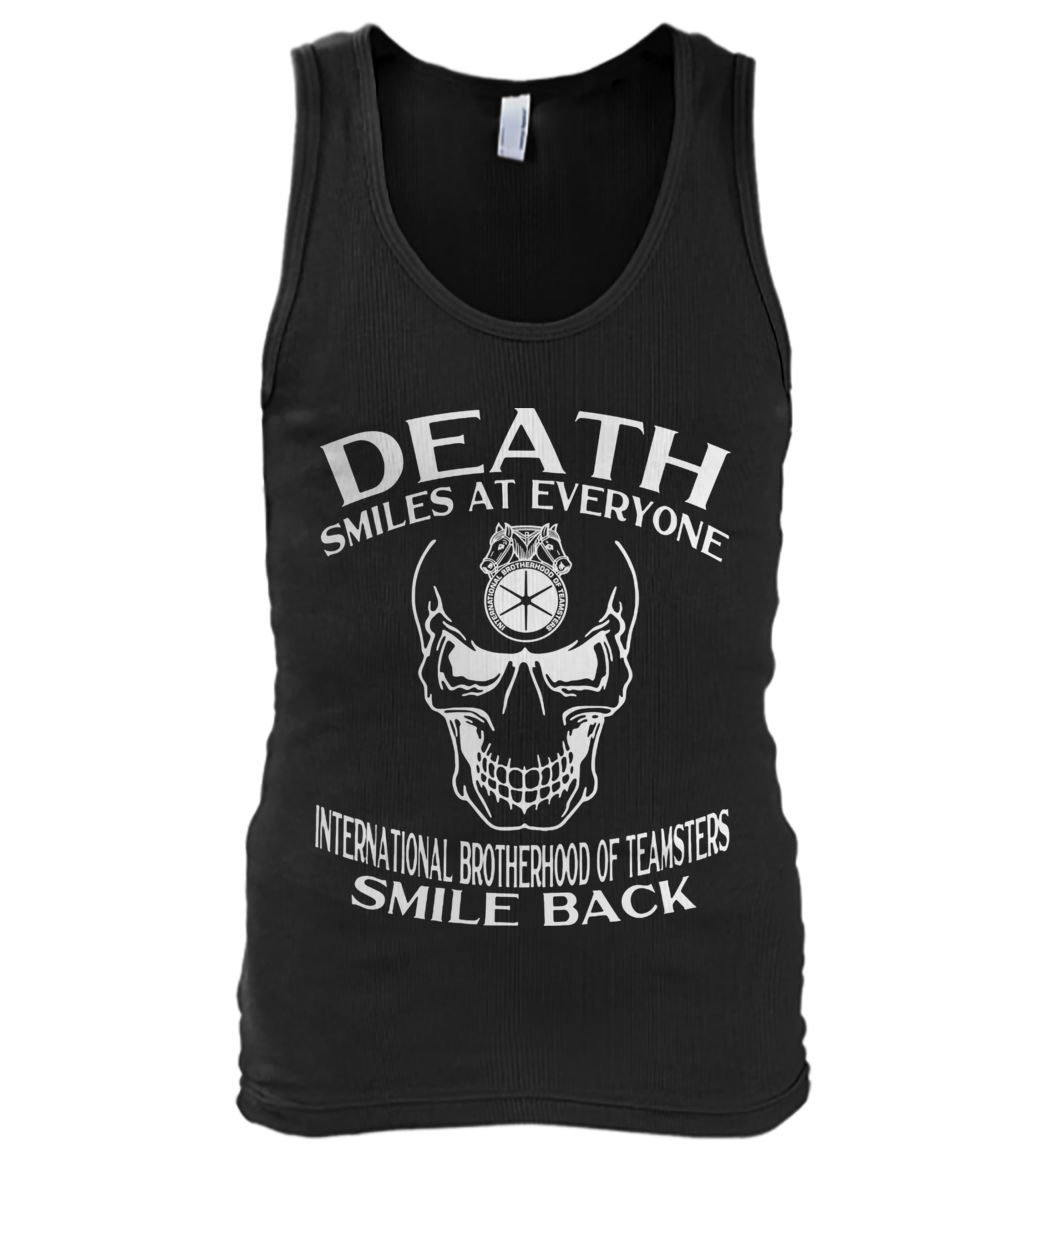 Skull death smiles at everyone international brotherhood of teamsters smile back tank top